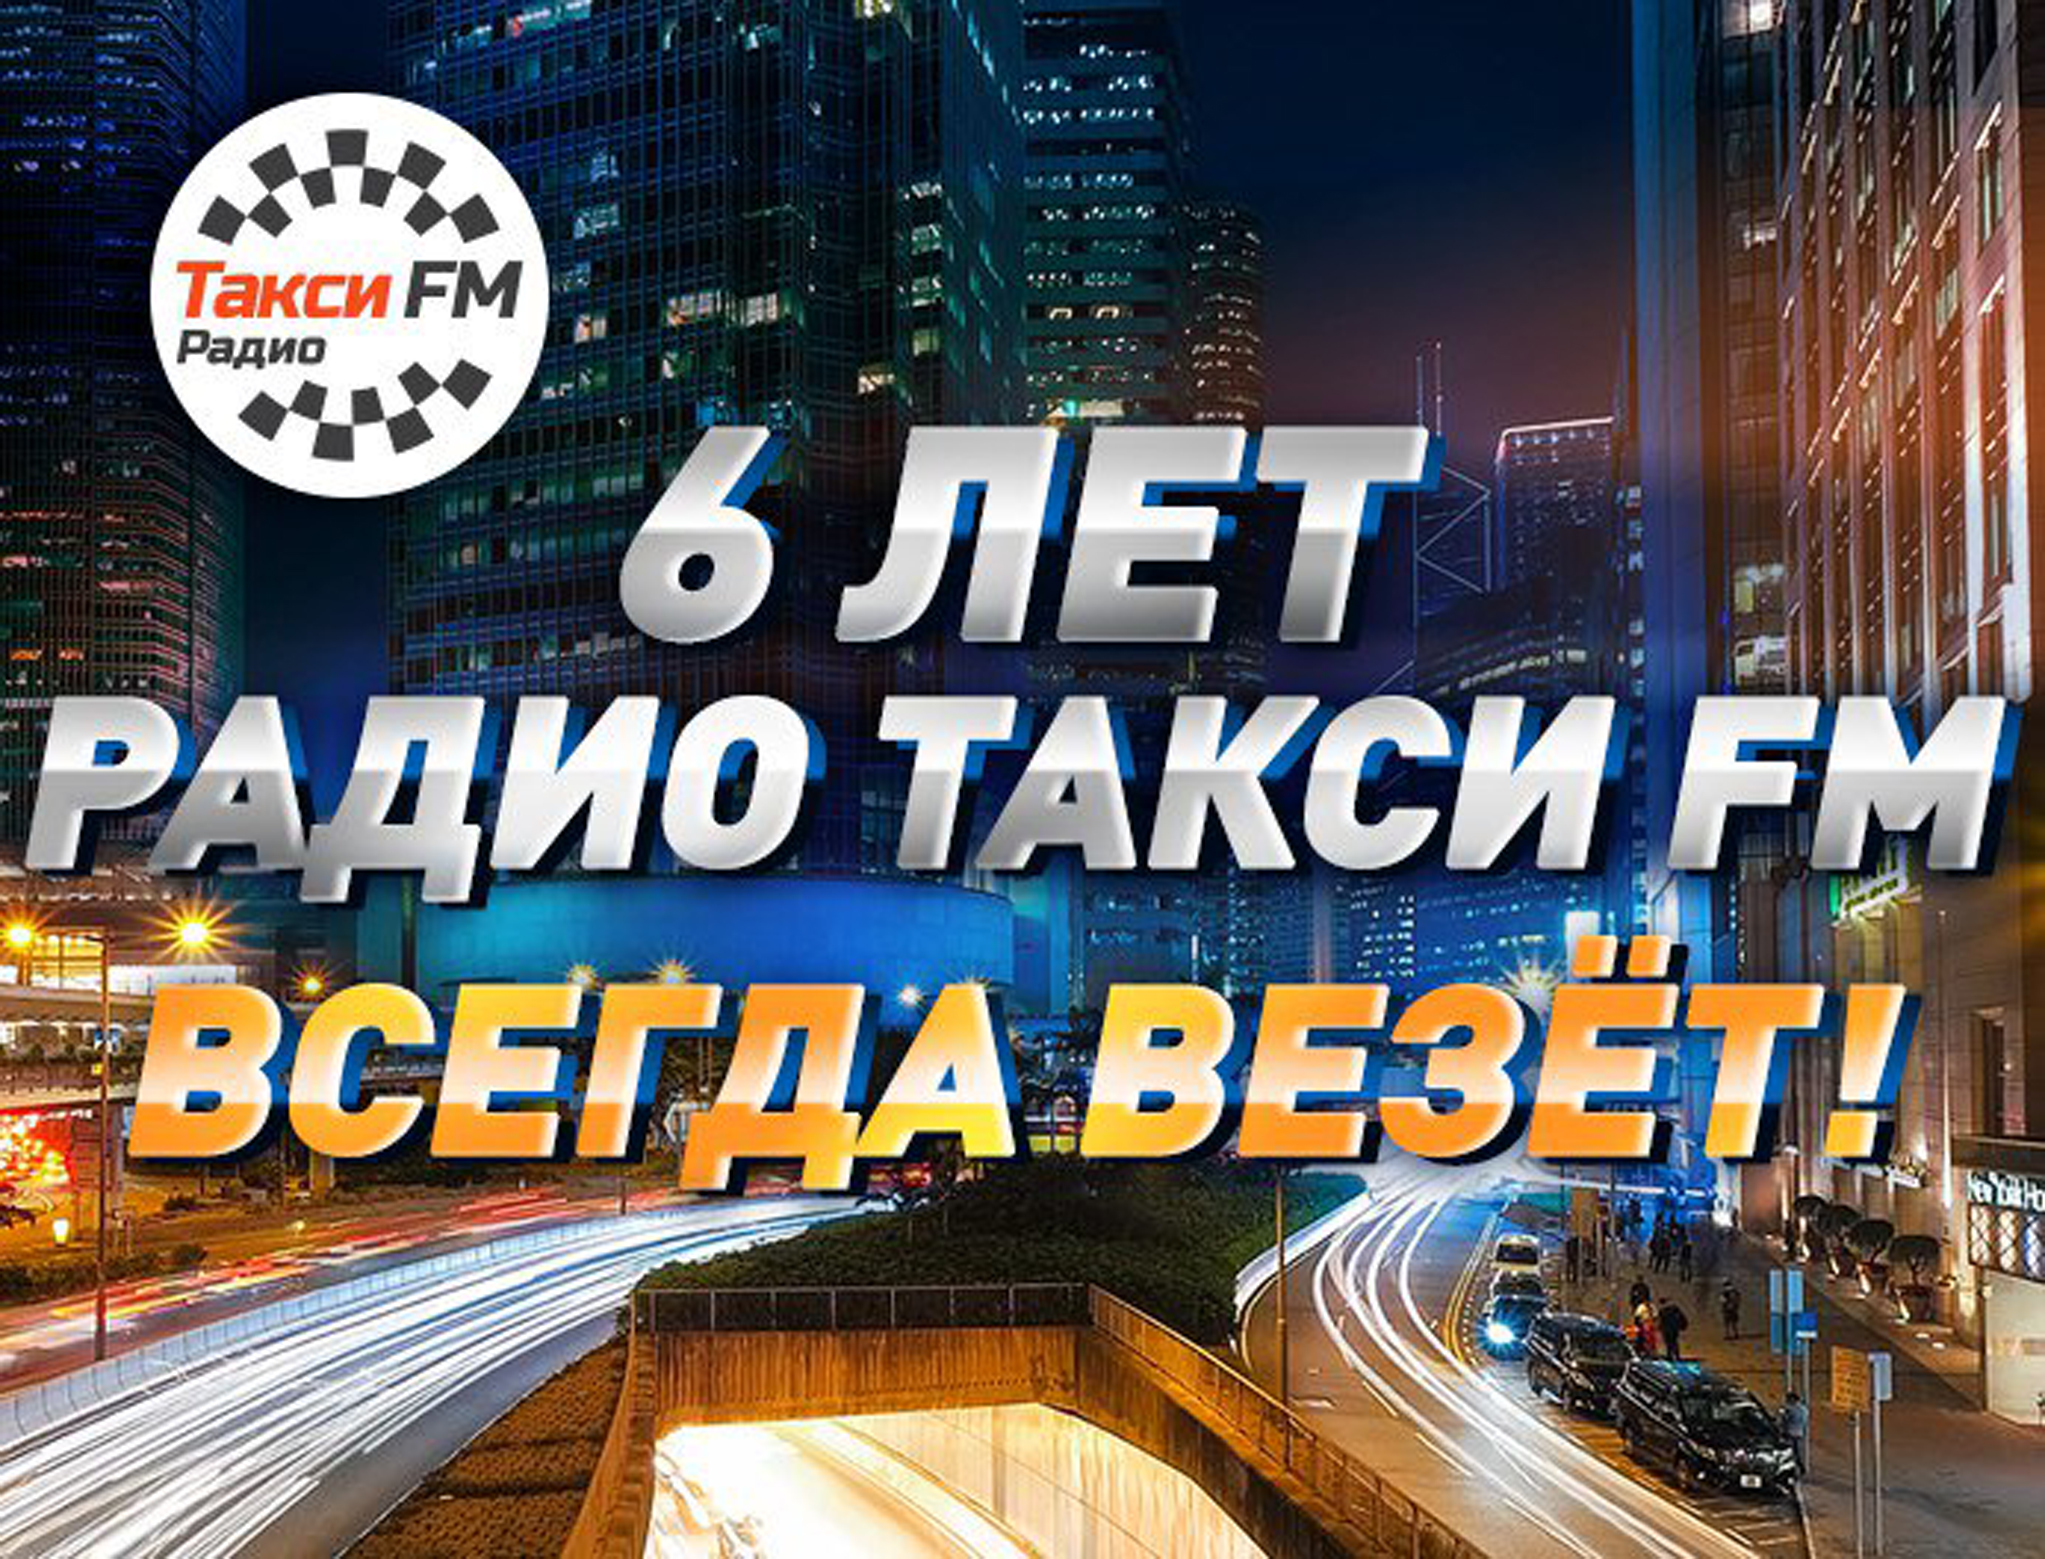 Радио такси москва. Такси ФМ. Радио такси ФМ Москва. Такси ФМ Саратов. Такси ФМ логотип.